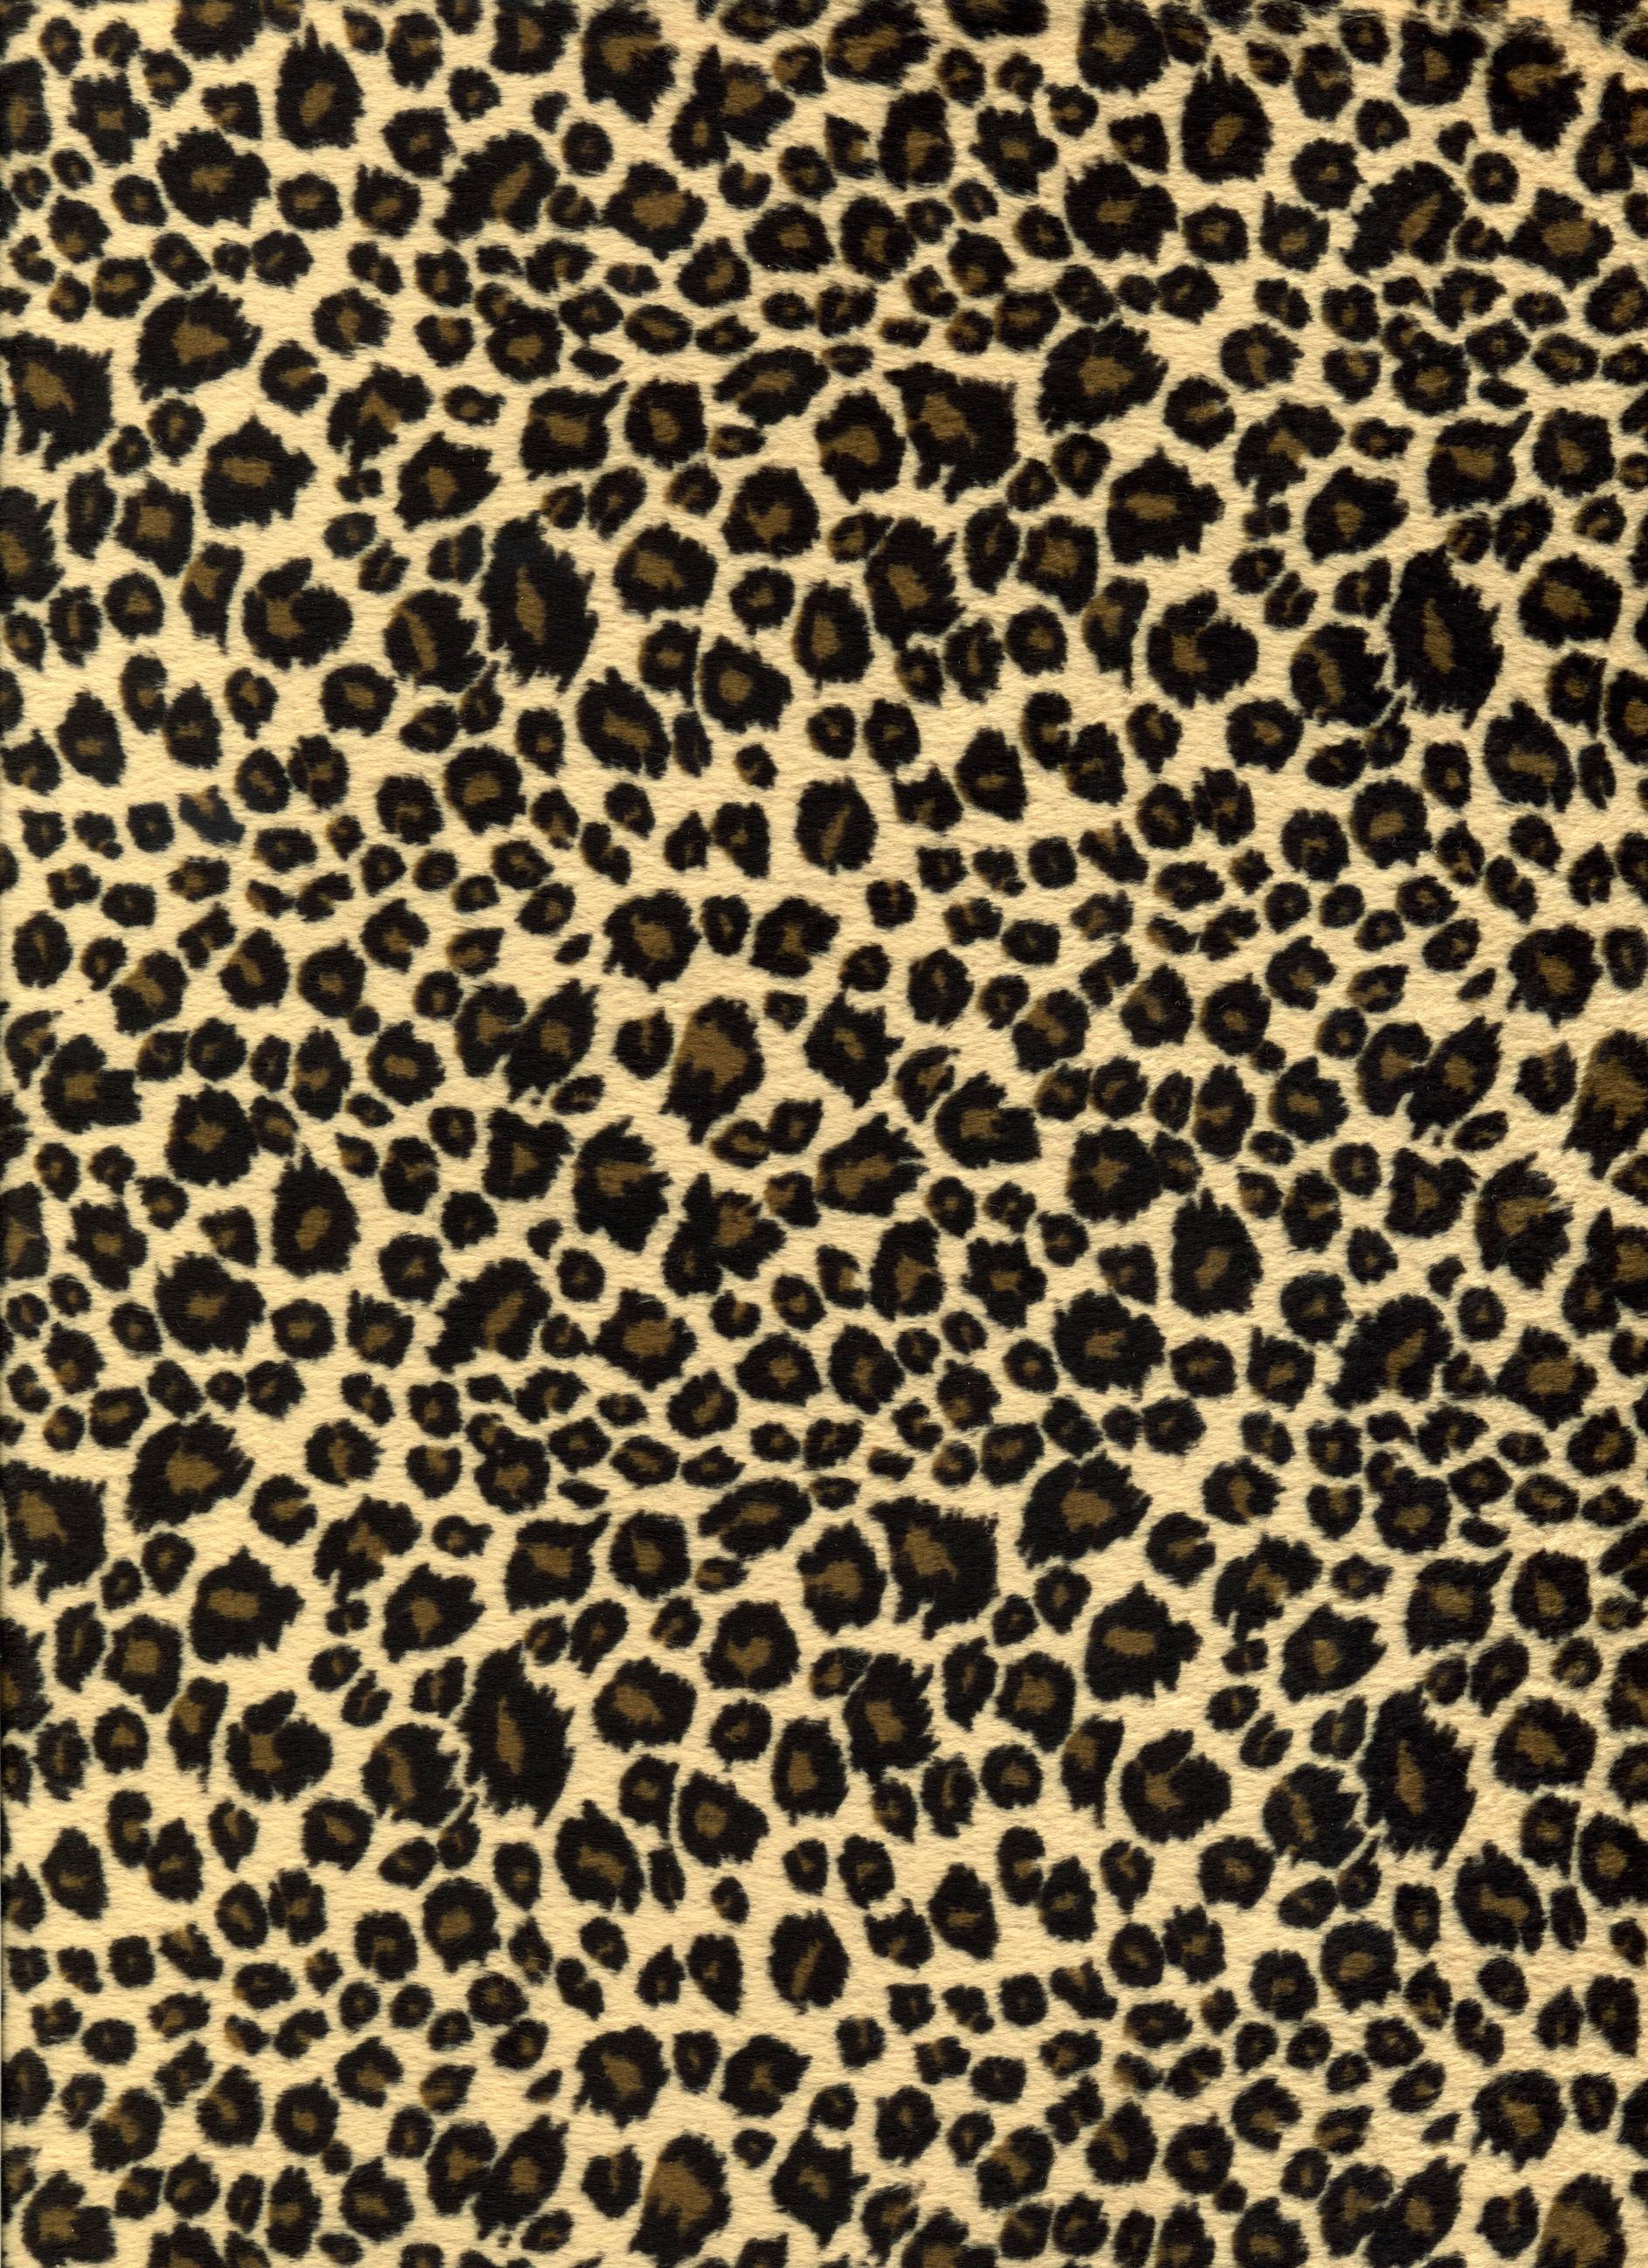 Leopard Background 1 403619 High Definition Wallpaper. wallalay